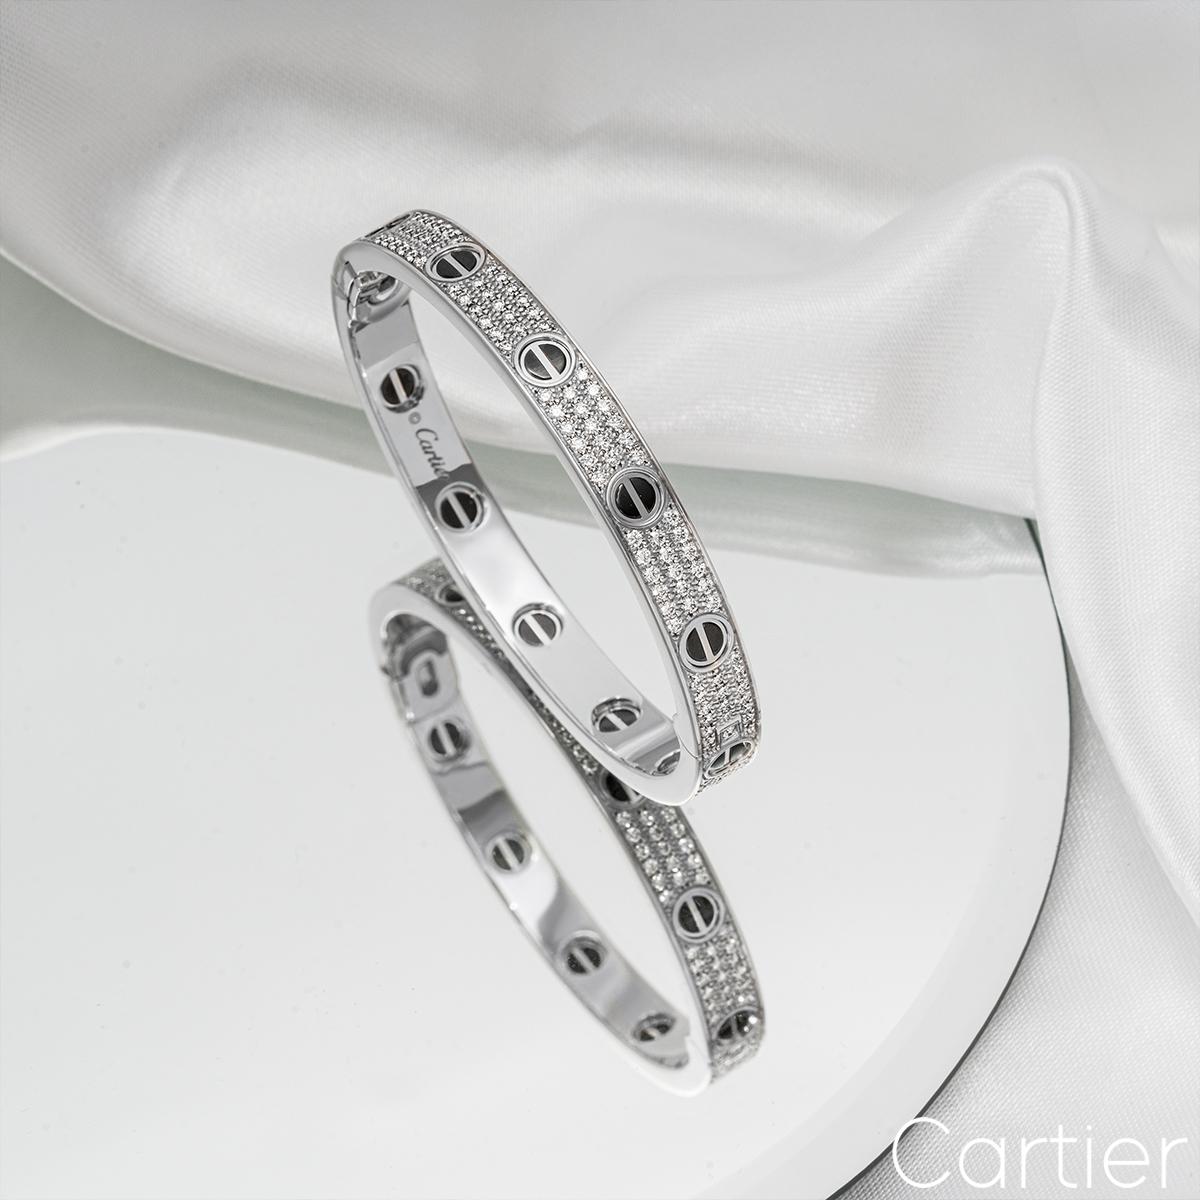 Round Cut Cartier White Gold Pave Diamond & Ceramic Love Bracelet N6032417 For Sale